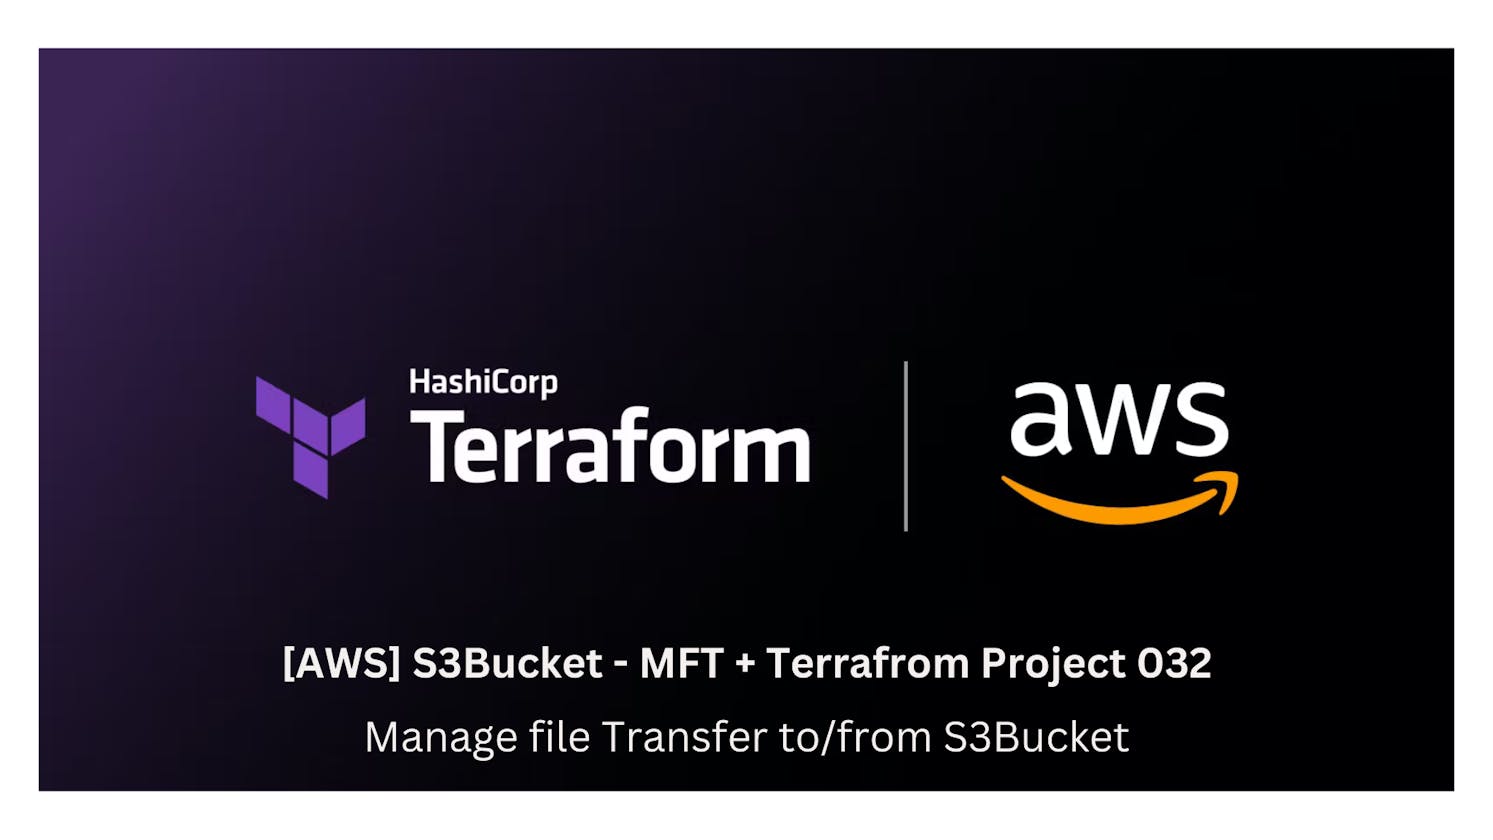 [AWS] S3Bucket - MFT + Terraform Project 03